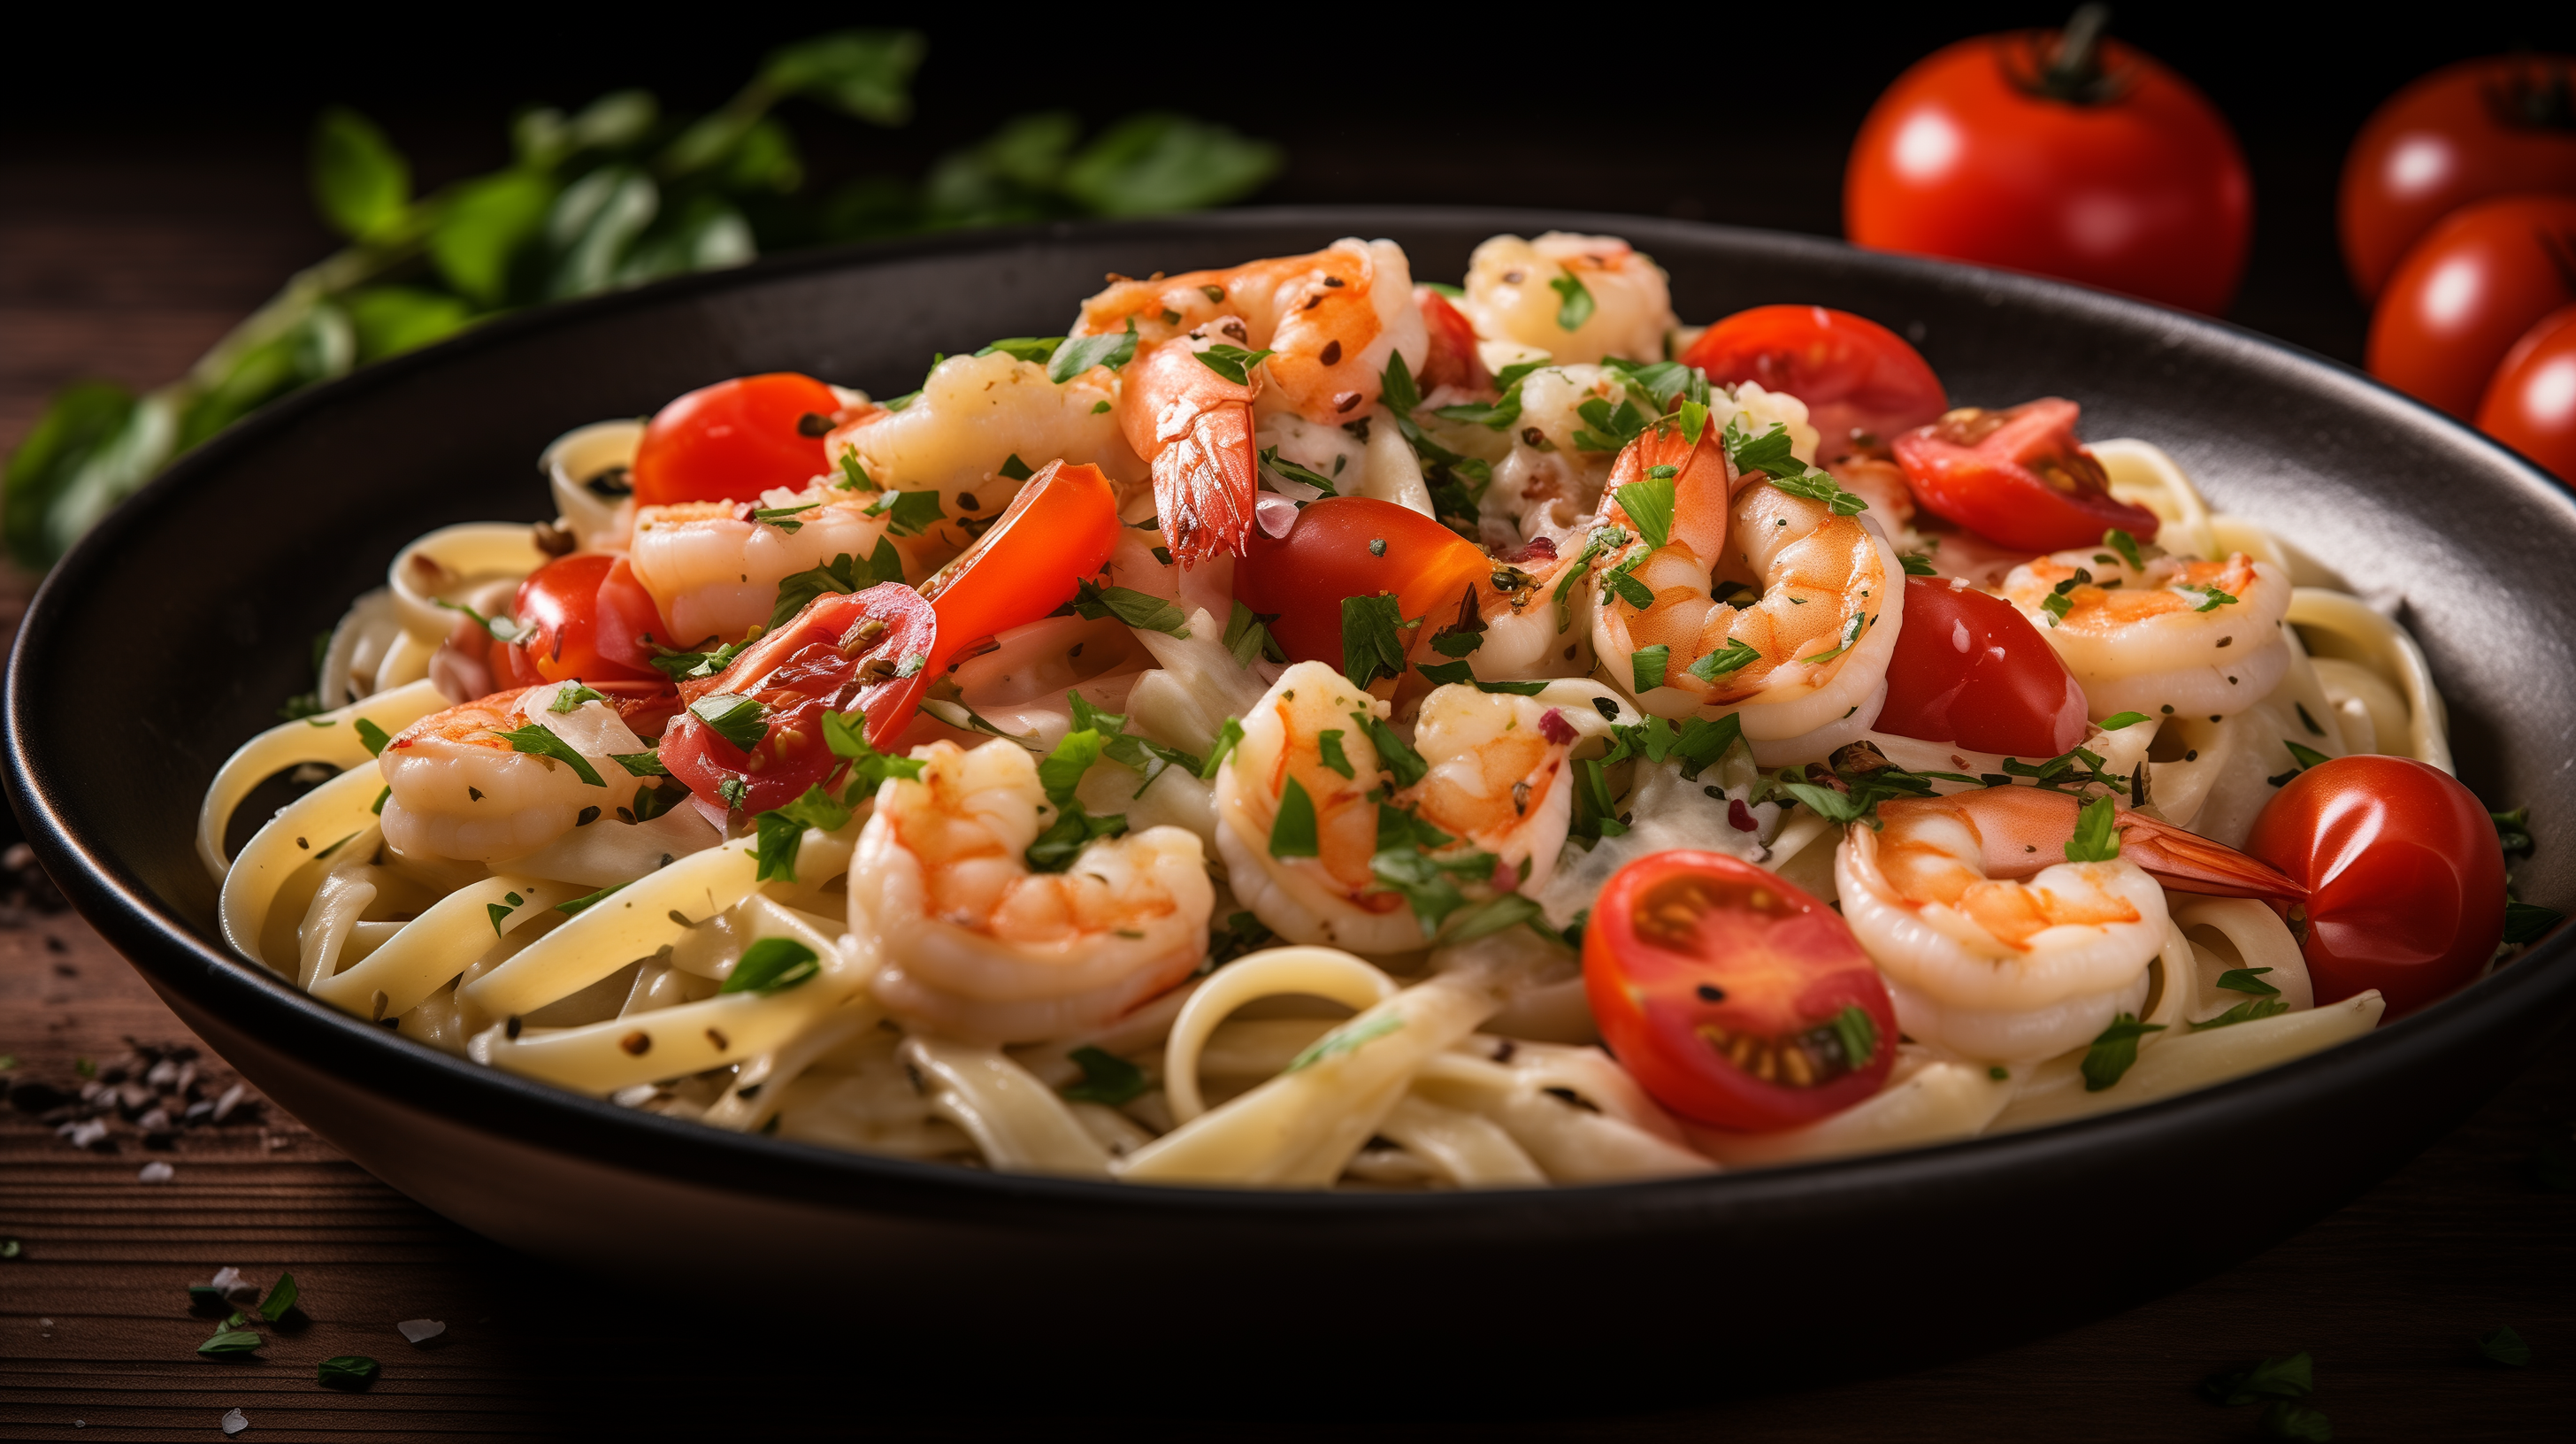 Image of spicy garlic-parm shrimp pasta.